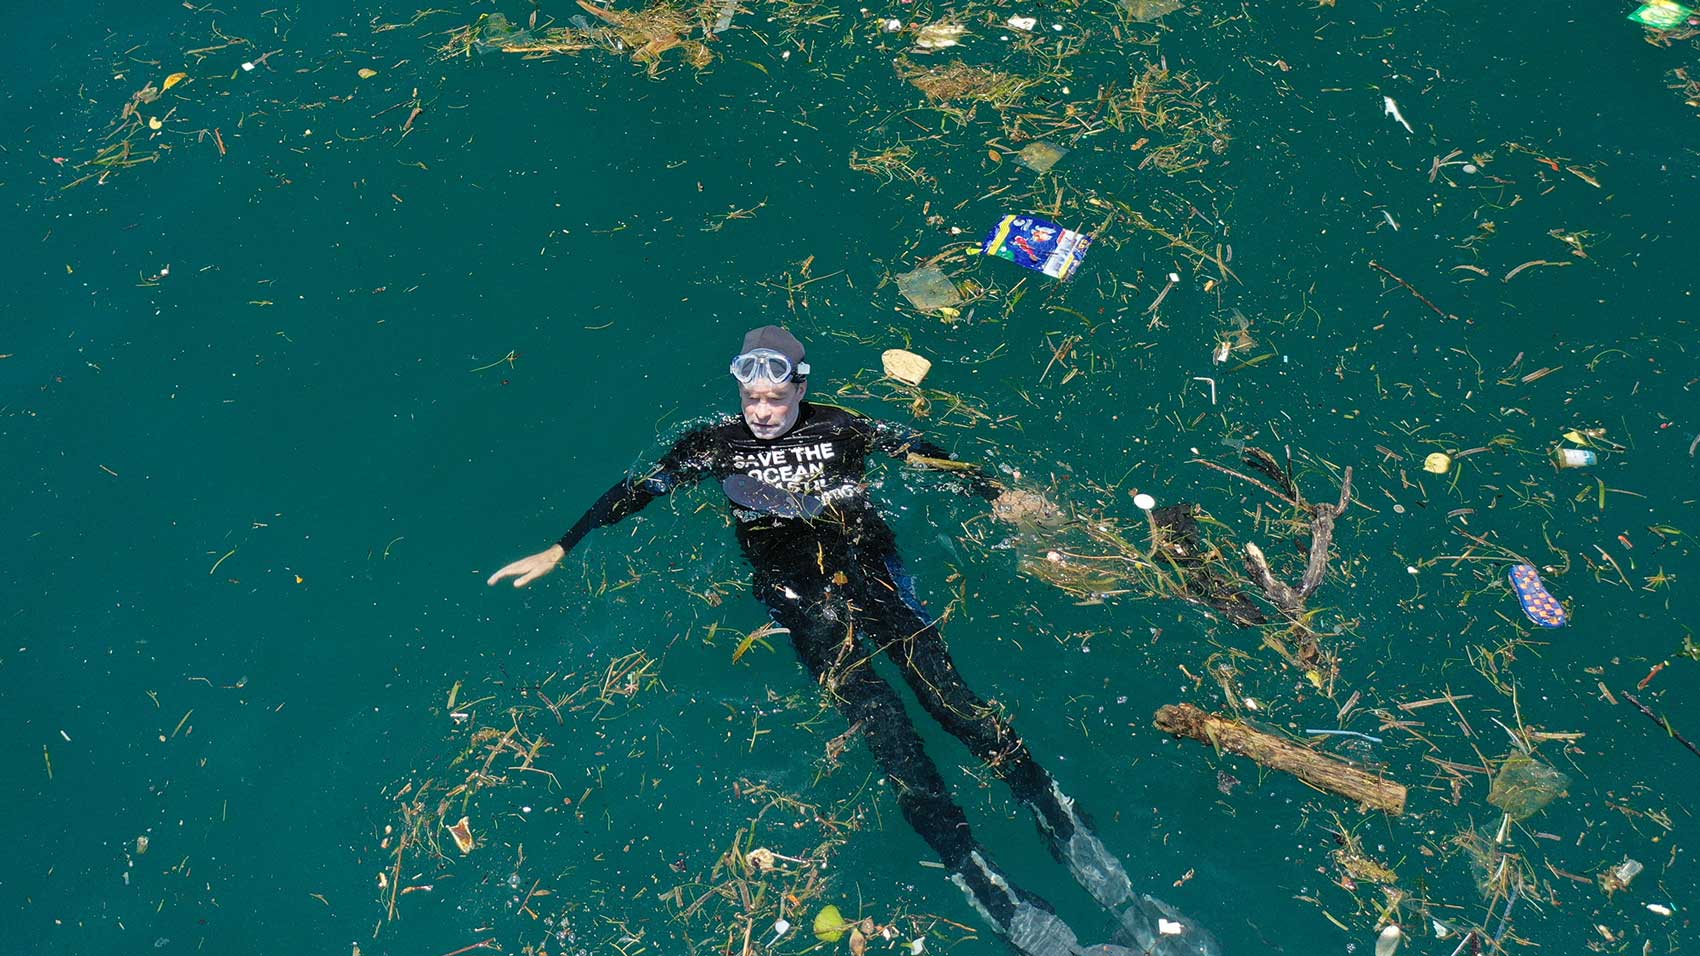 swimming in plastic ocean pollution